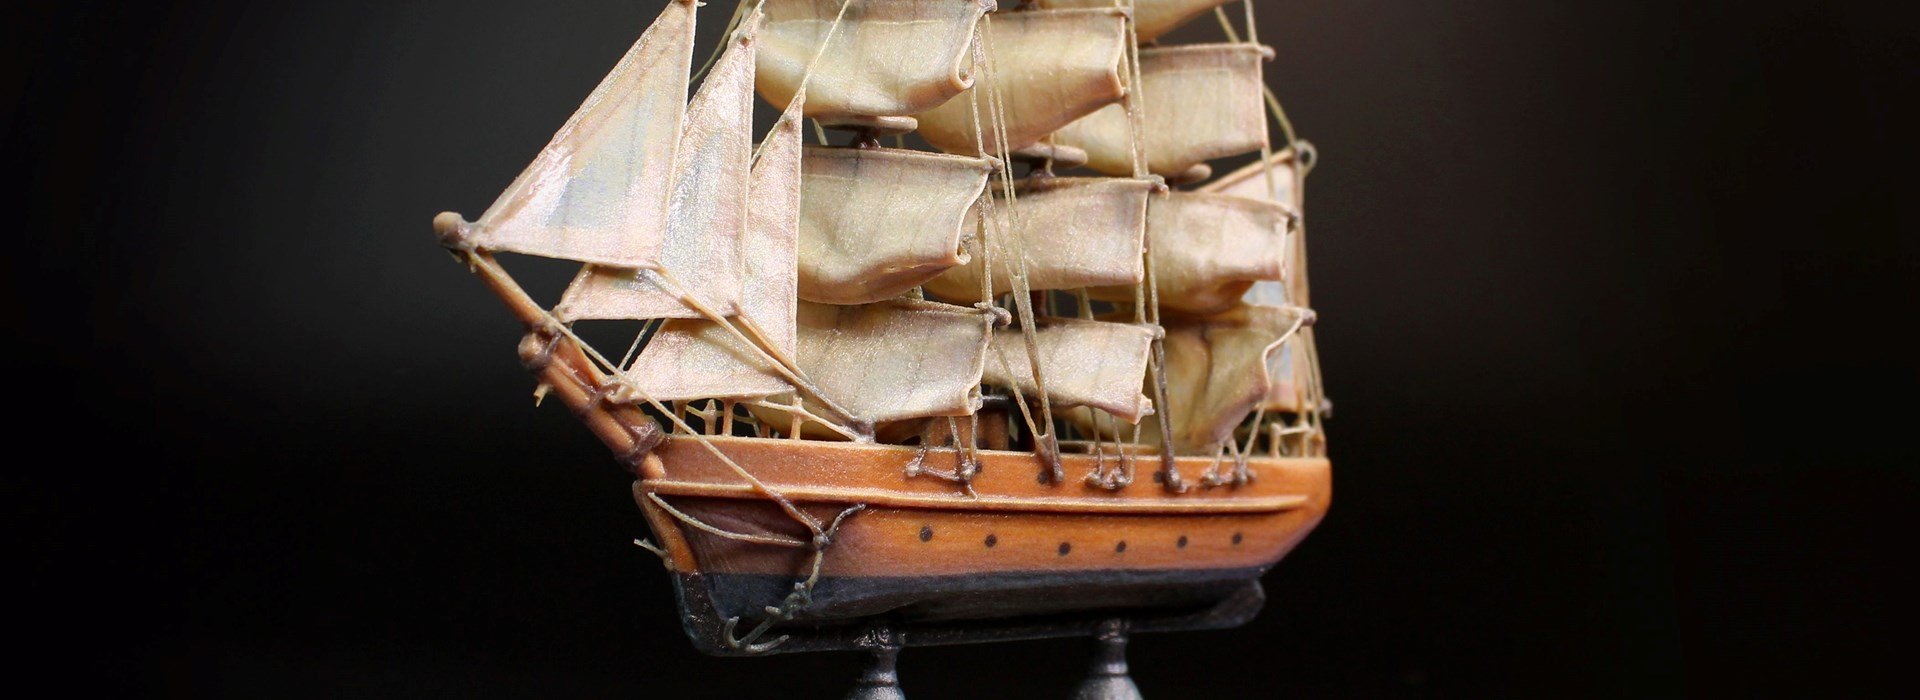 Mayflower Ship - WSS - black background.jpg